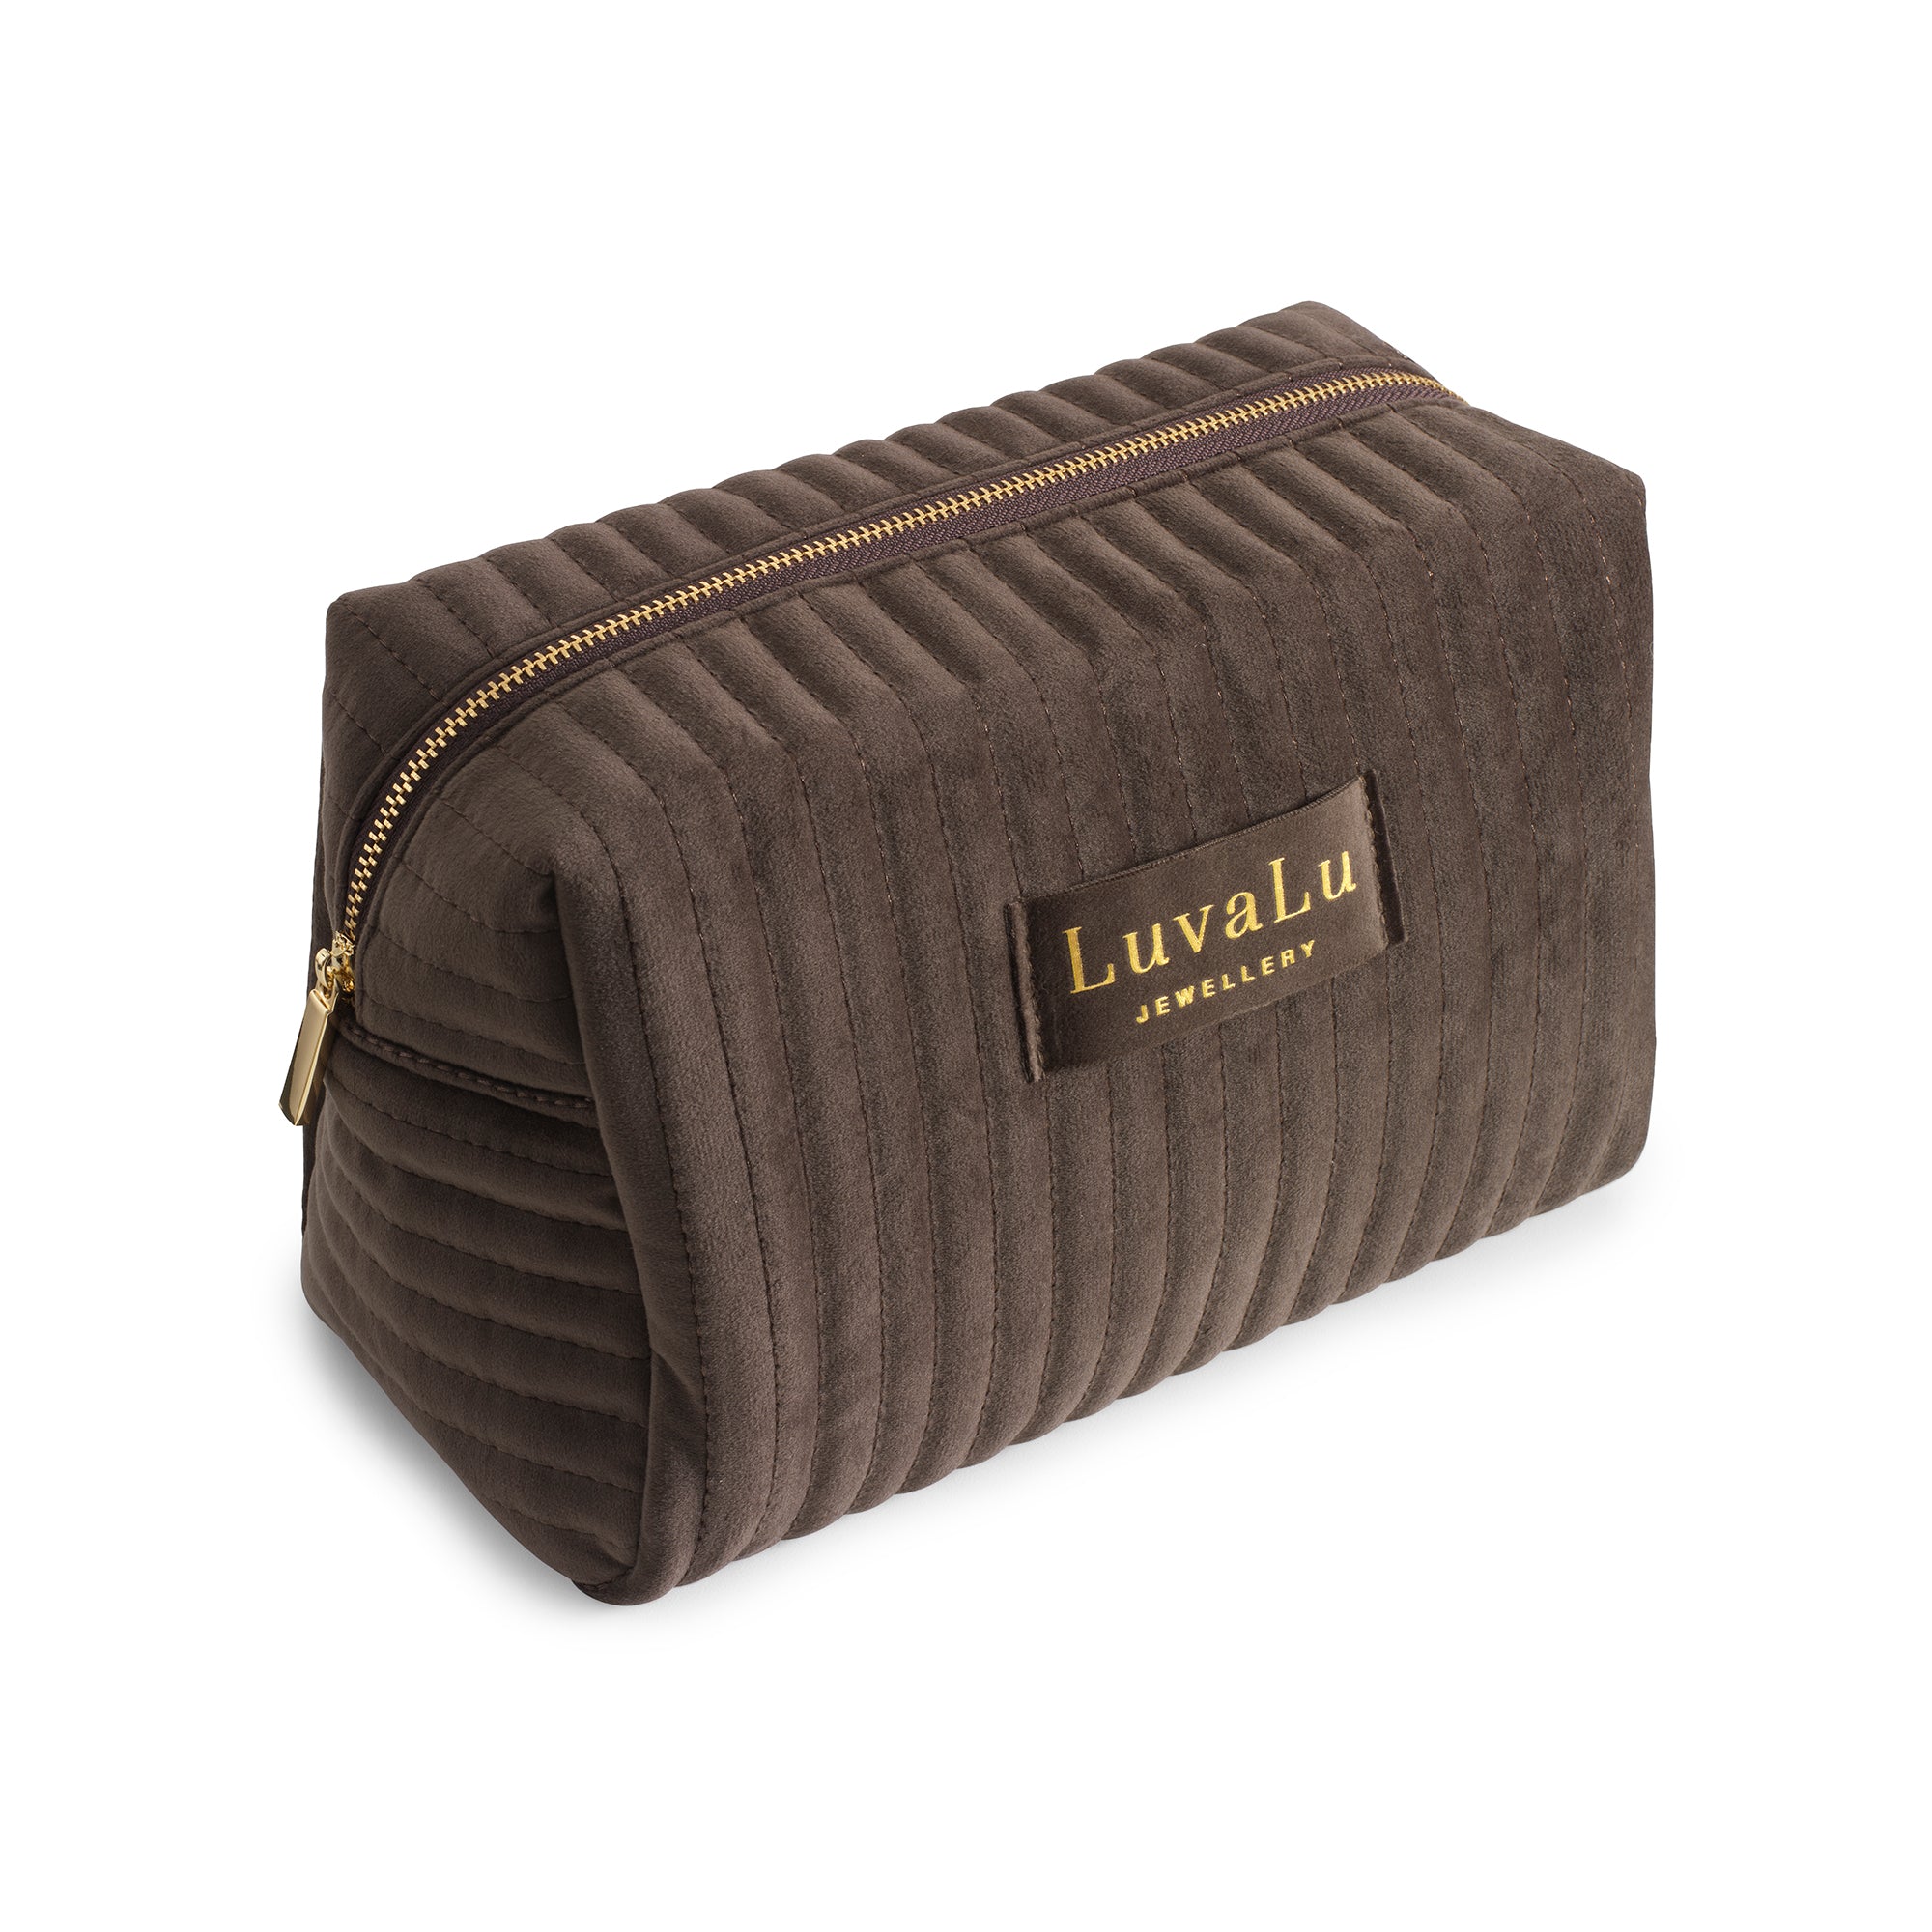 LuvaLu Jewellery - Big Brown makeup bag